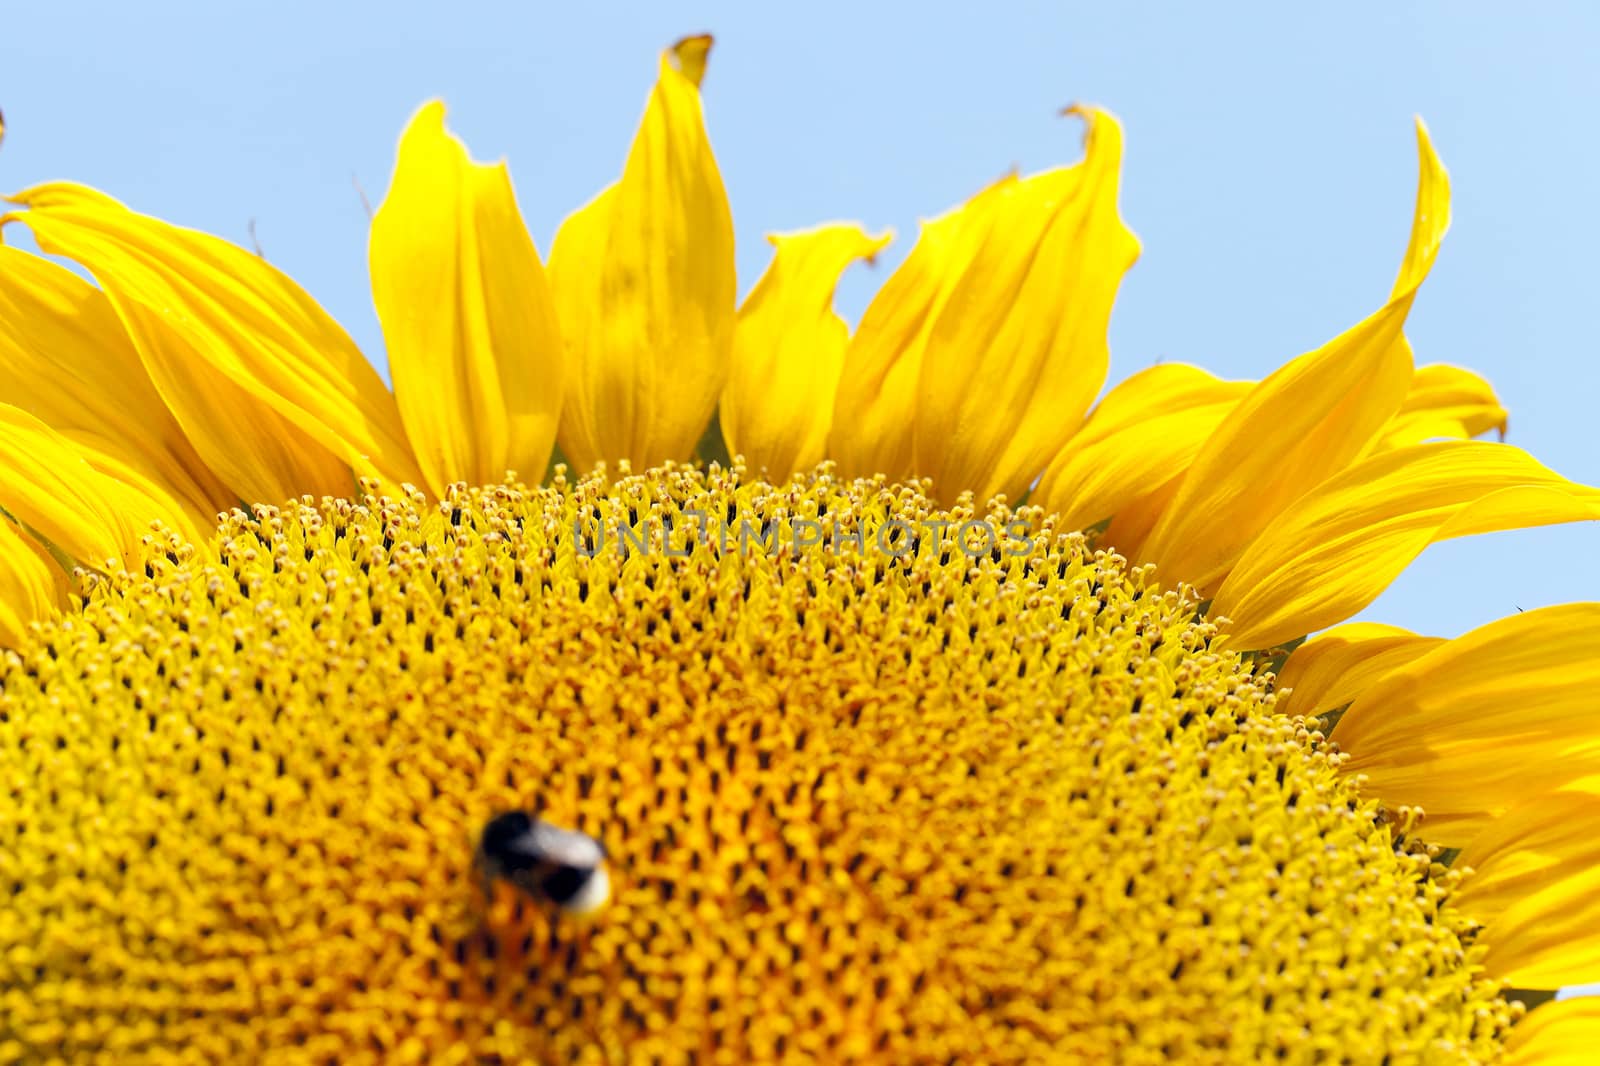 flower Sunflower, close-up by avq